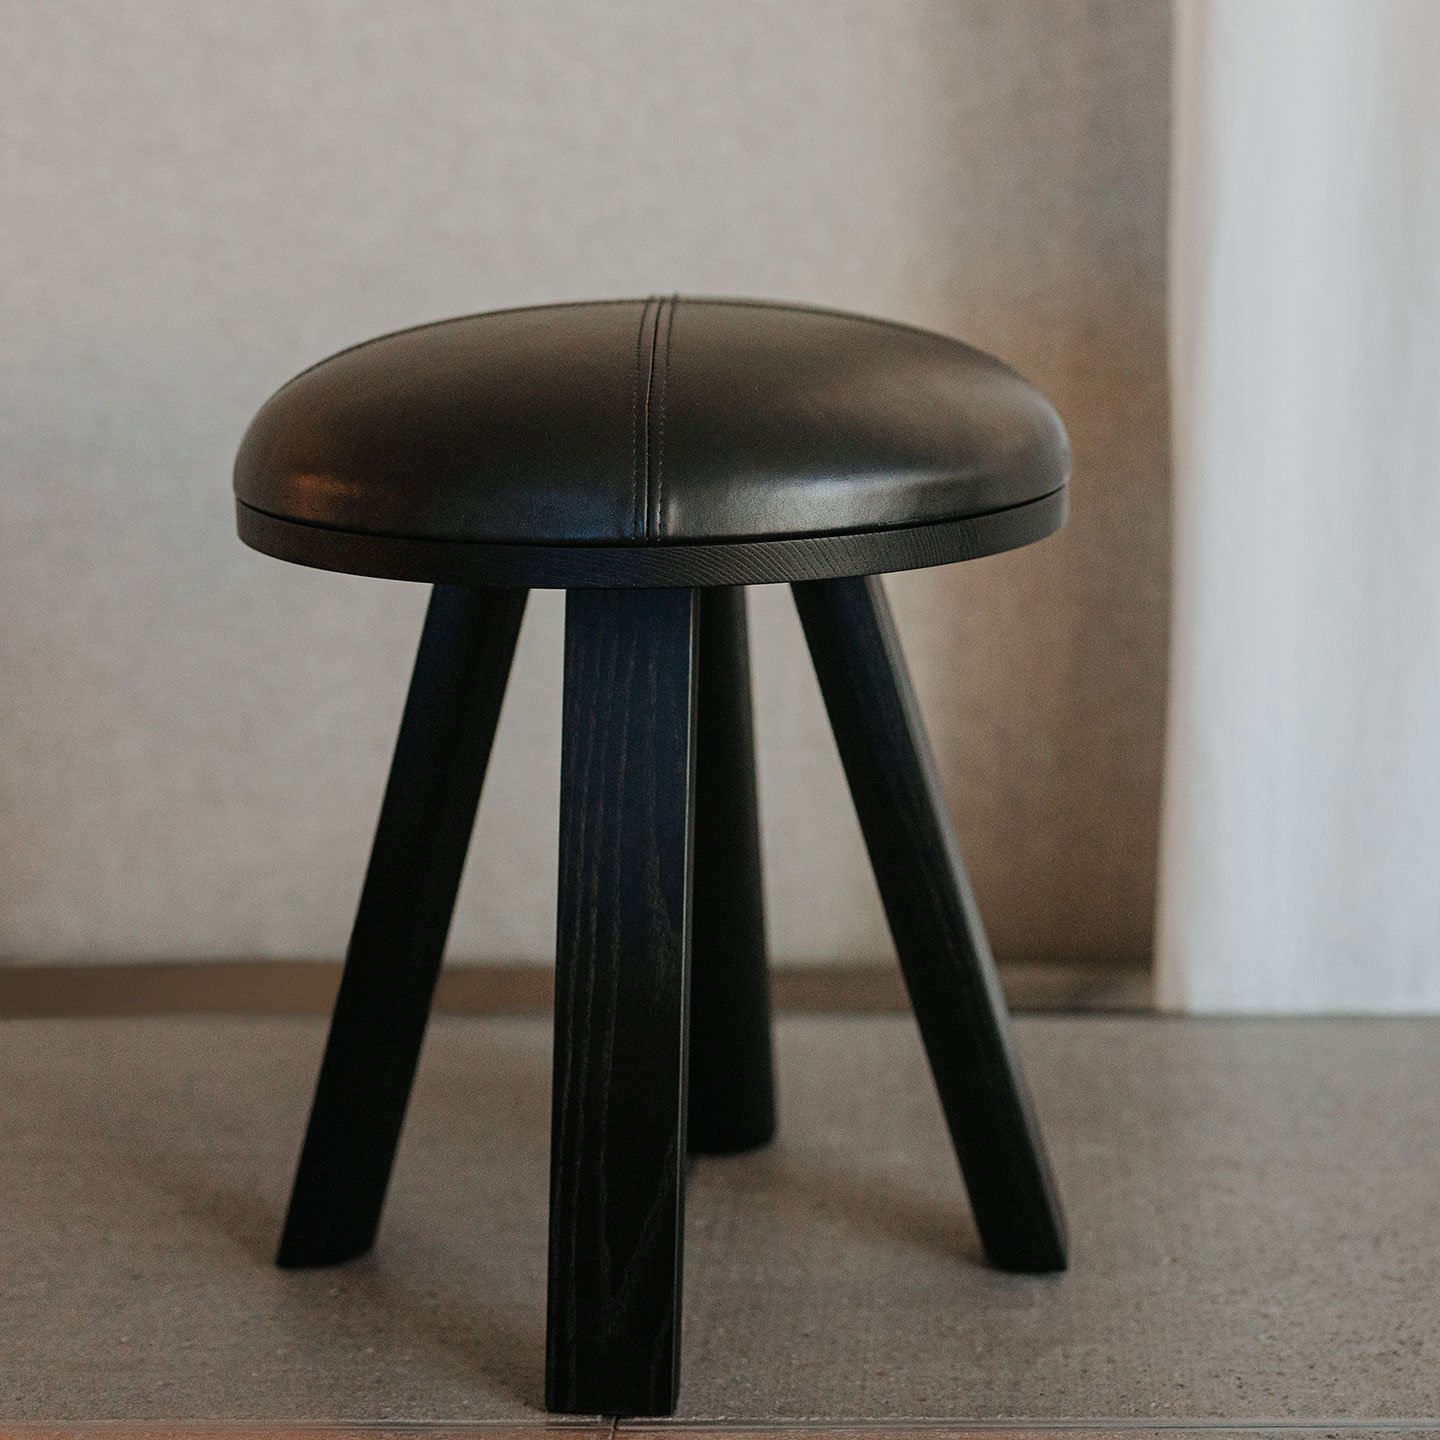 Haworth BuzziMilk stool in black leather and wood